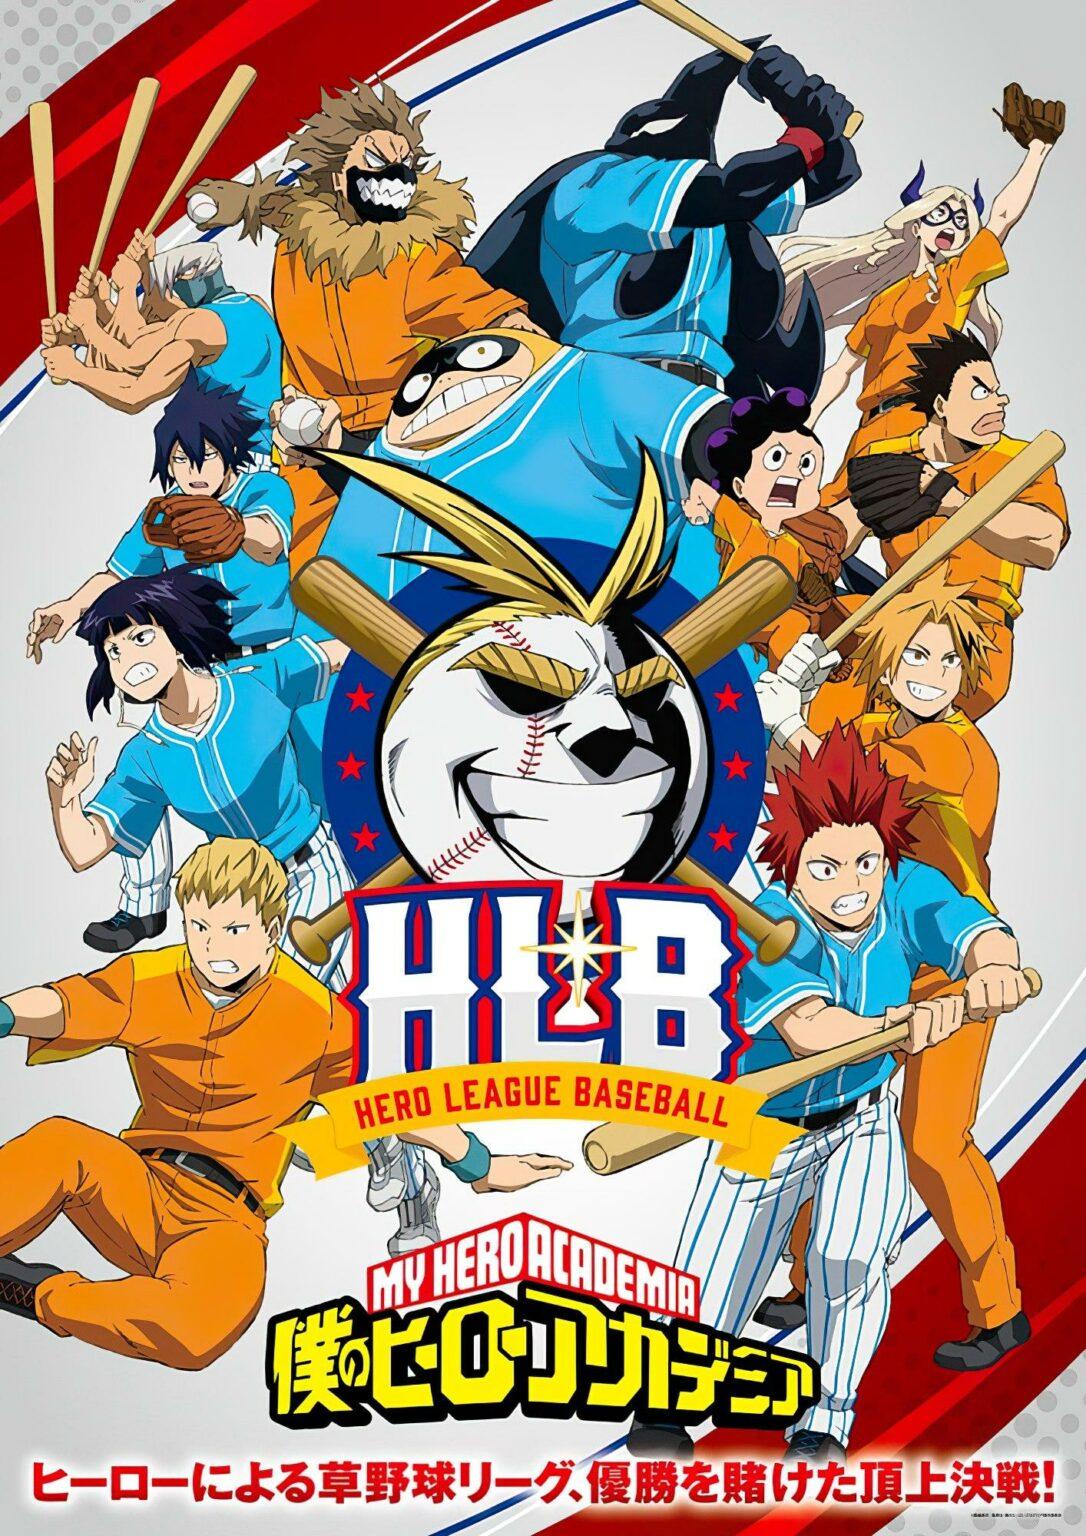 Hero League Baseball, GamersRD